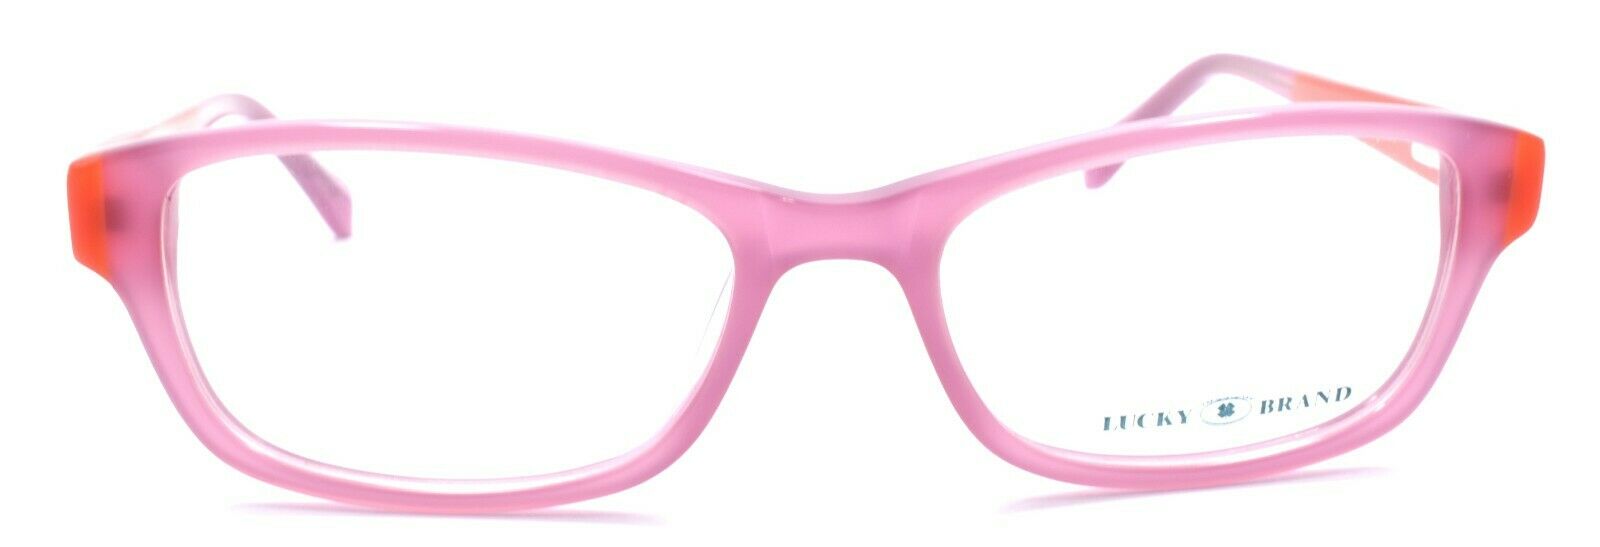 2-LUCKY BRAND Favorite Eyeglasses Frames SMALL 49-16-130 Pink + CASE-751286228137-IKSpecs